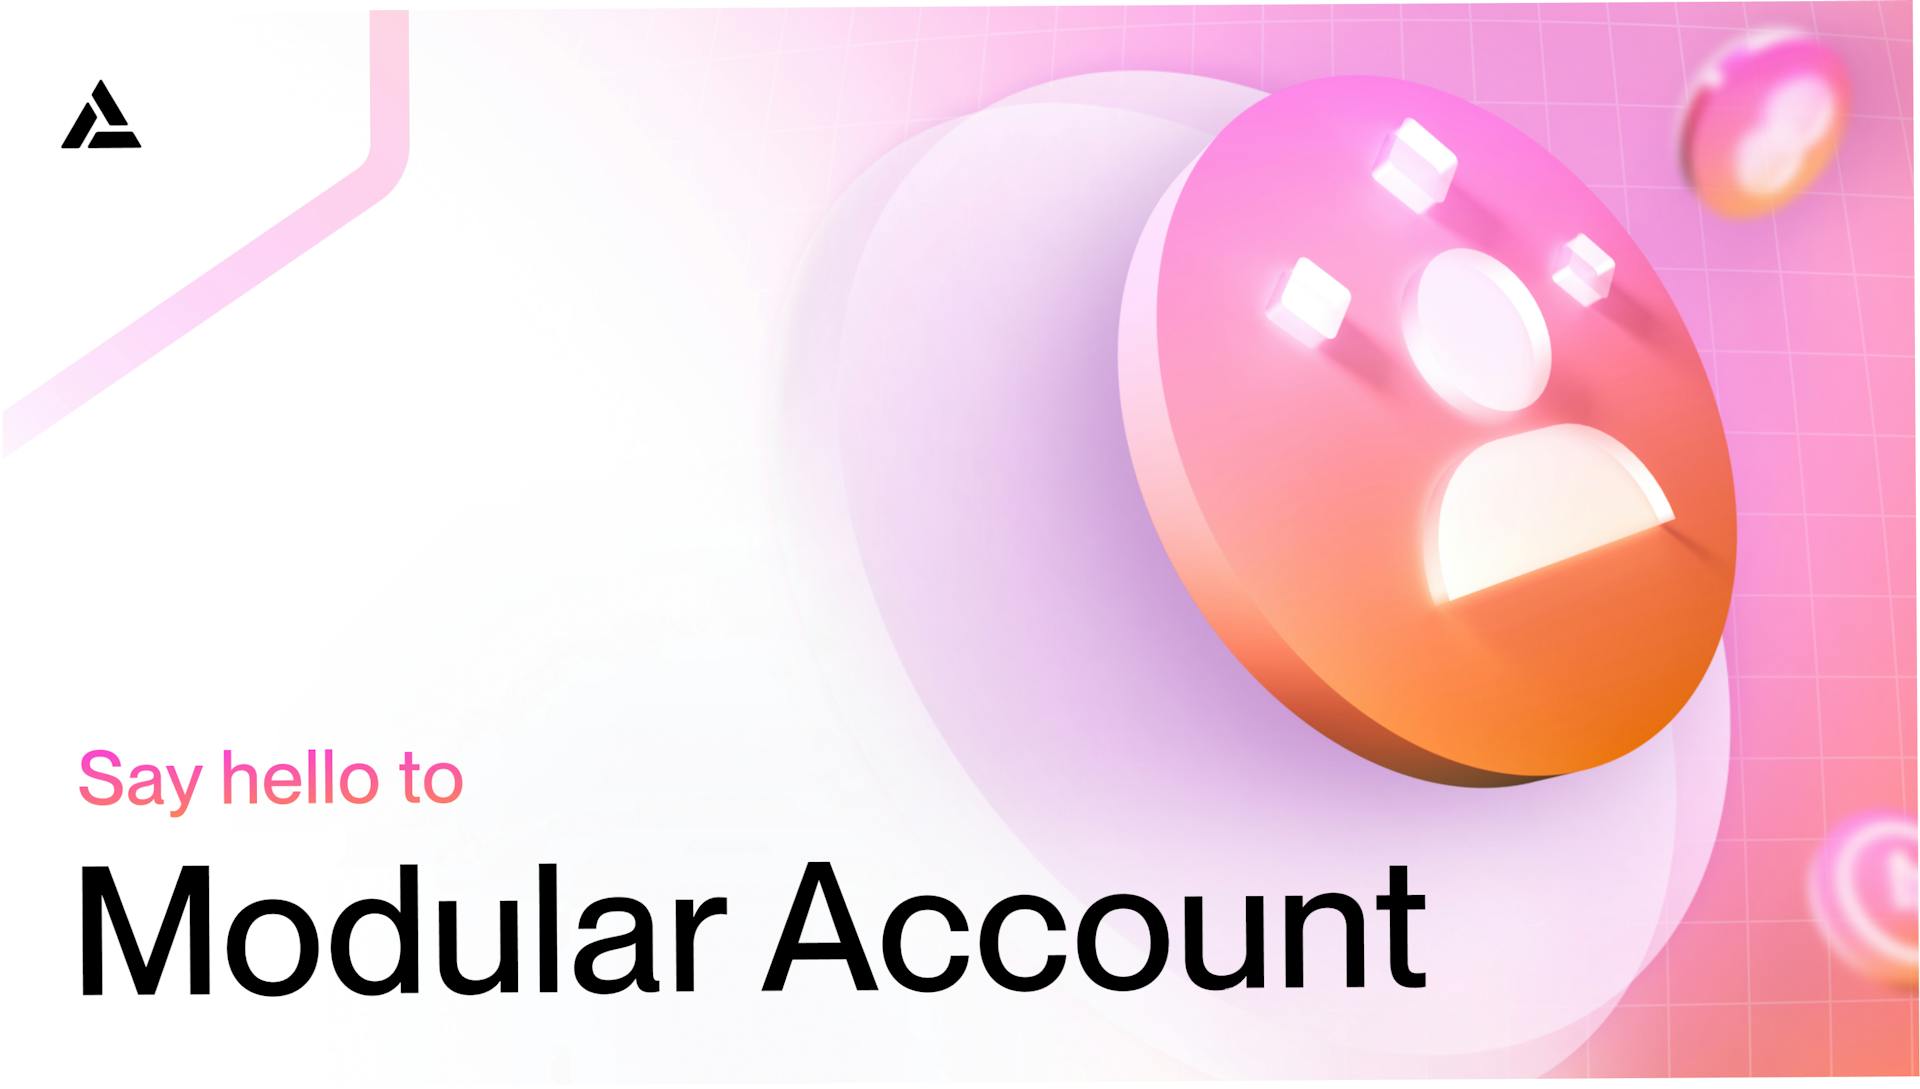 modular account